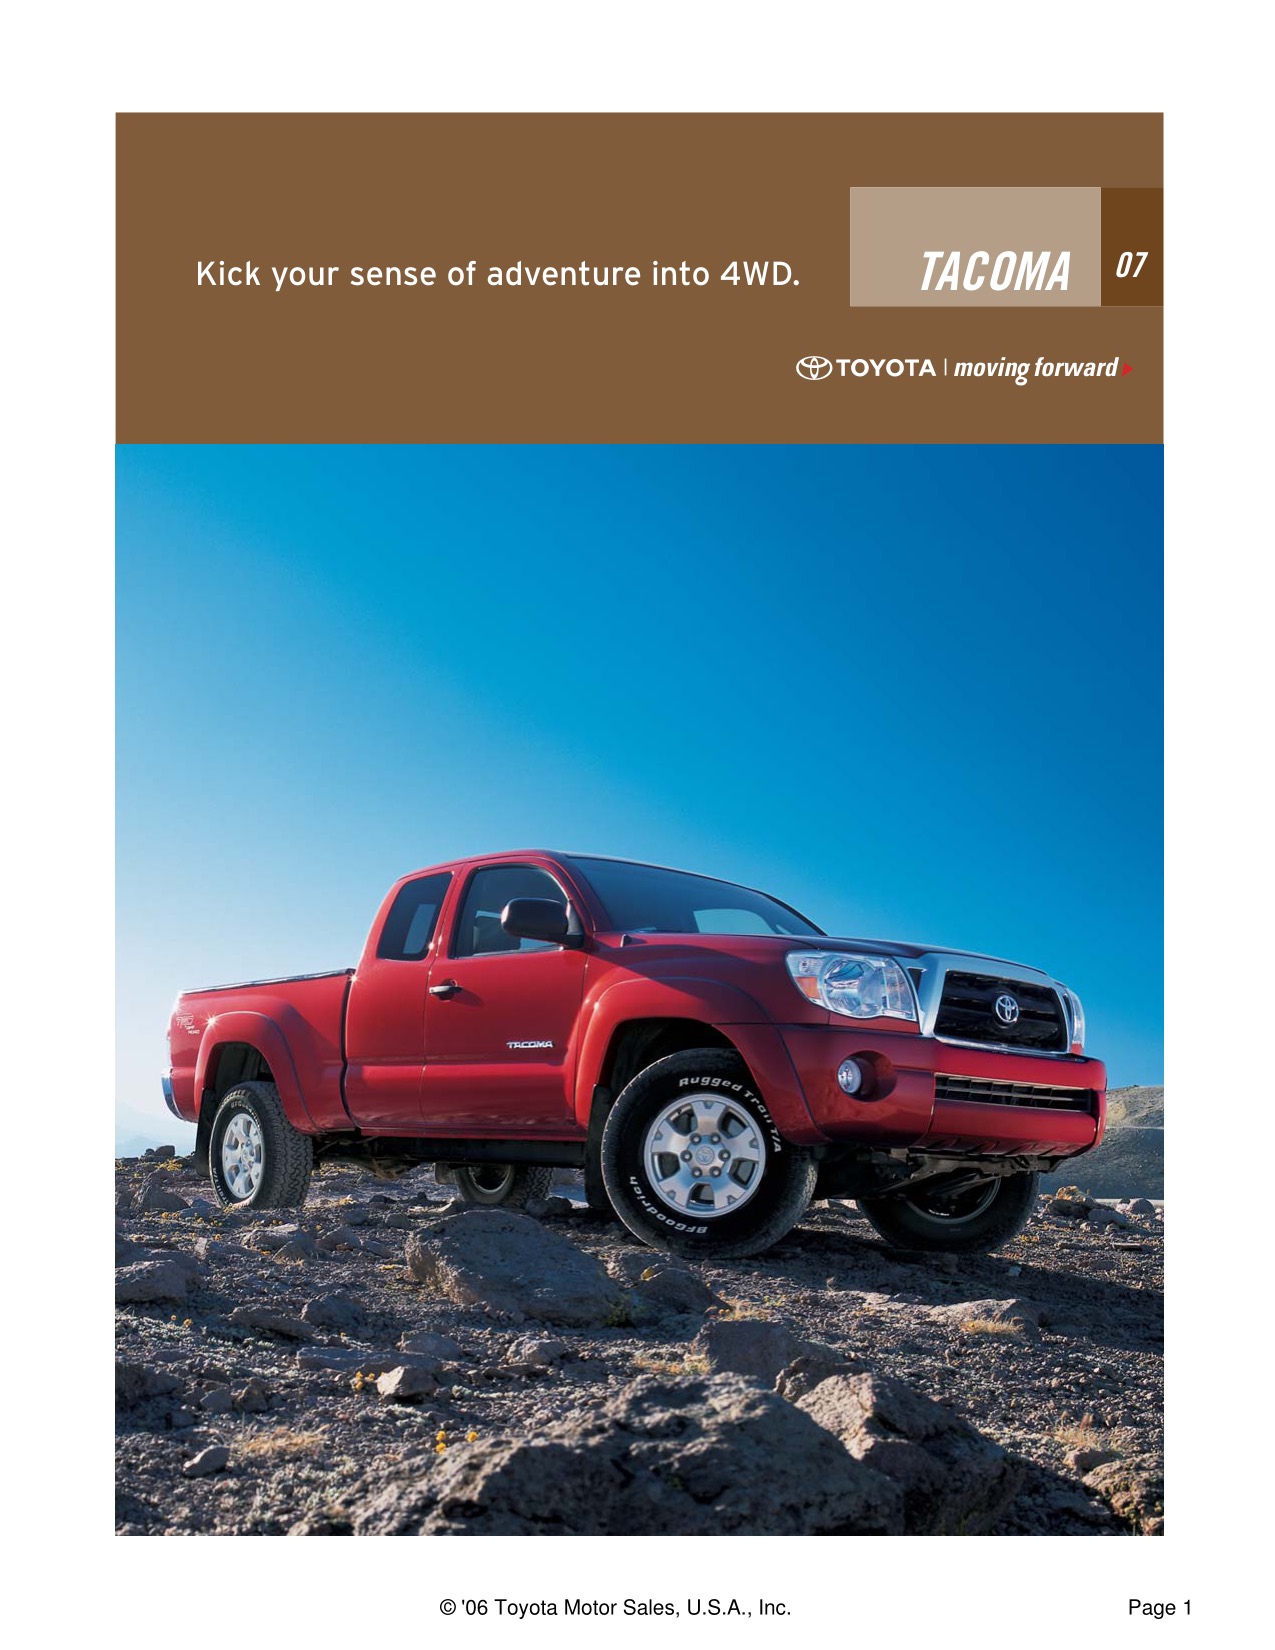 2007 Toyota Tacoma 4x4 Brochure